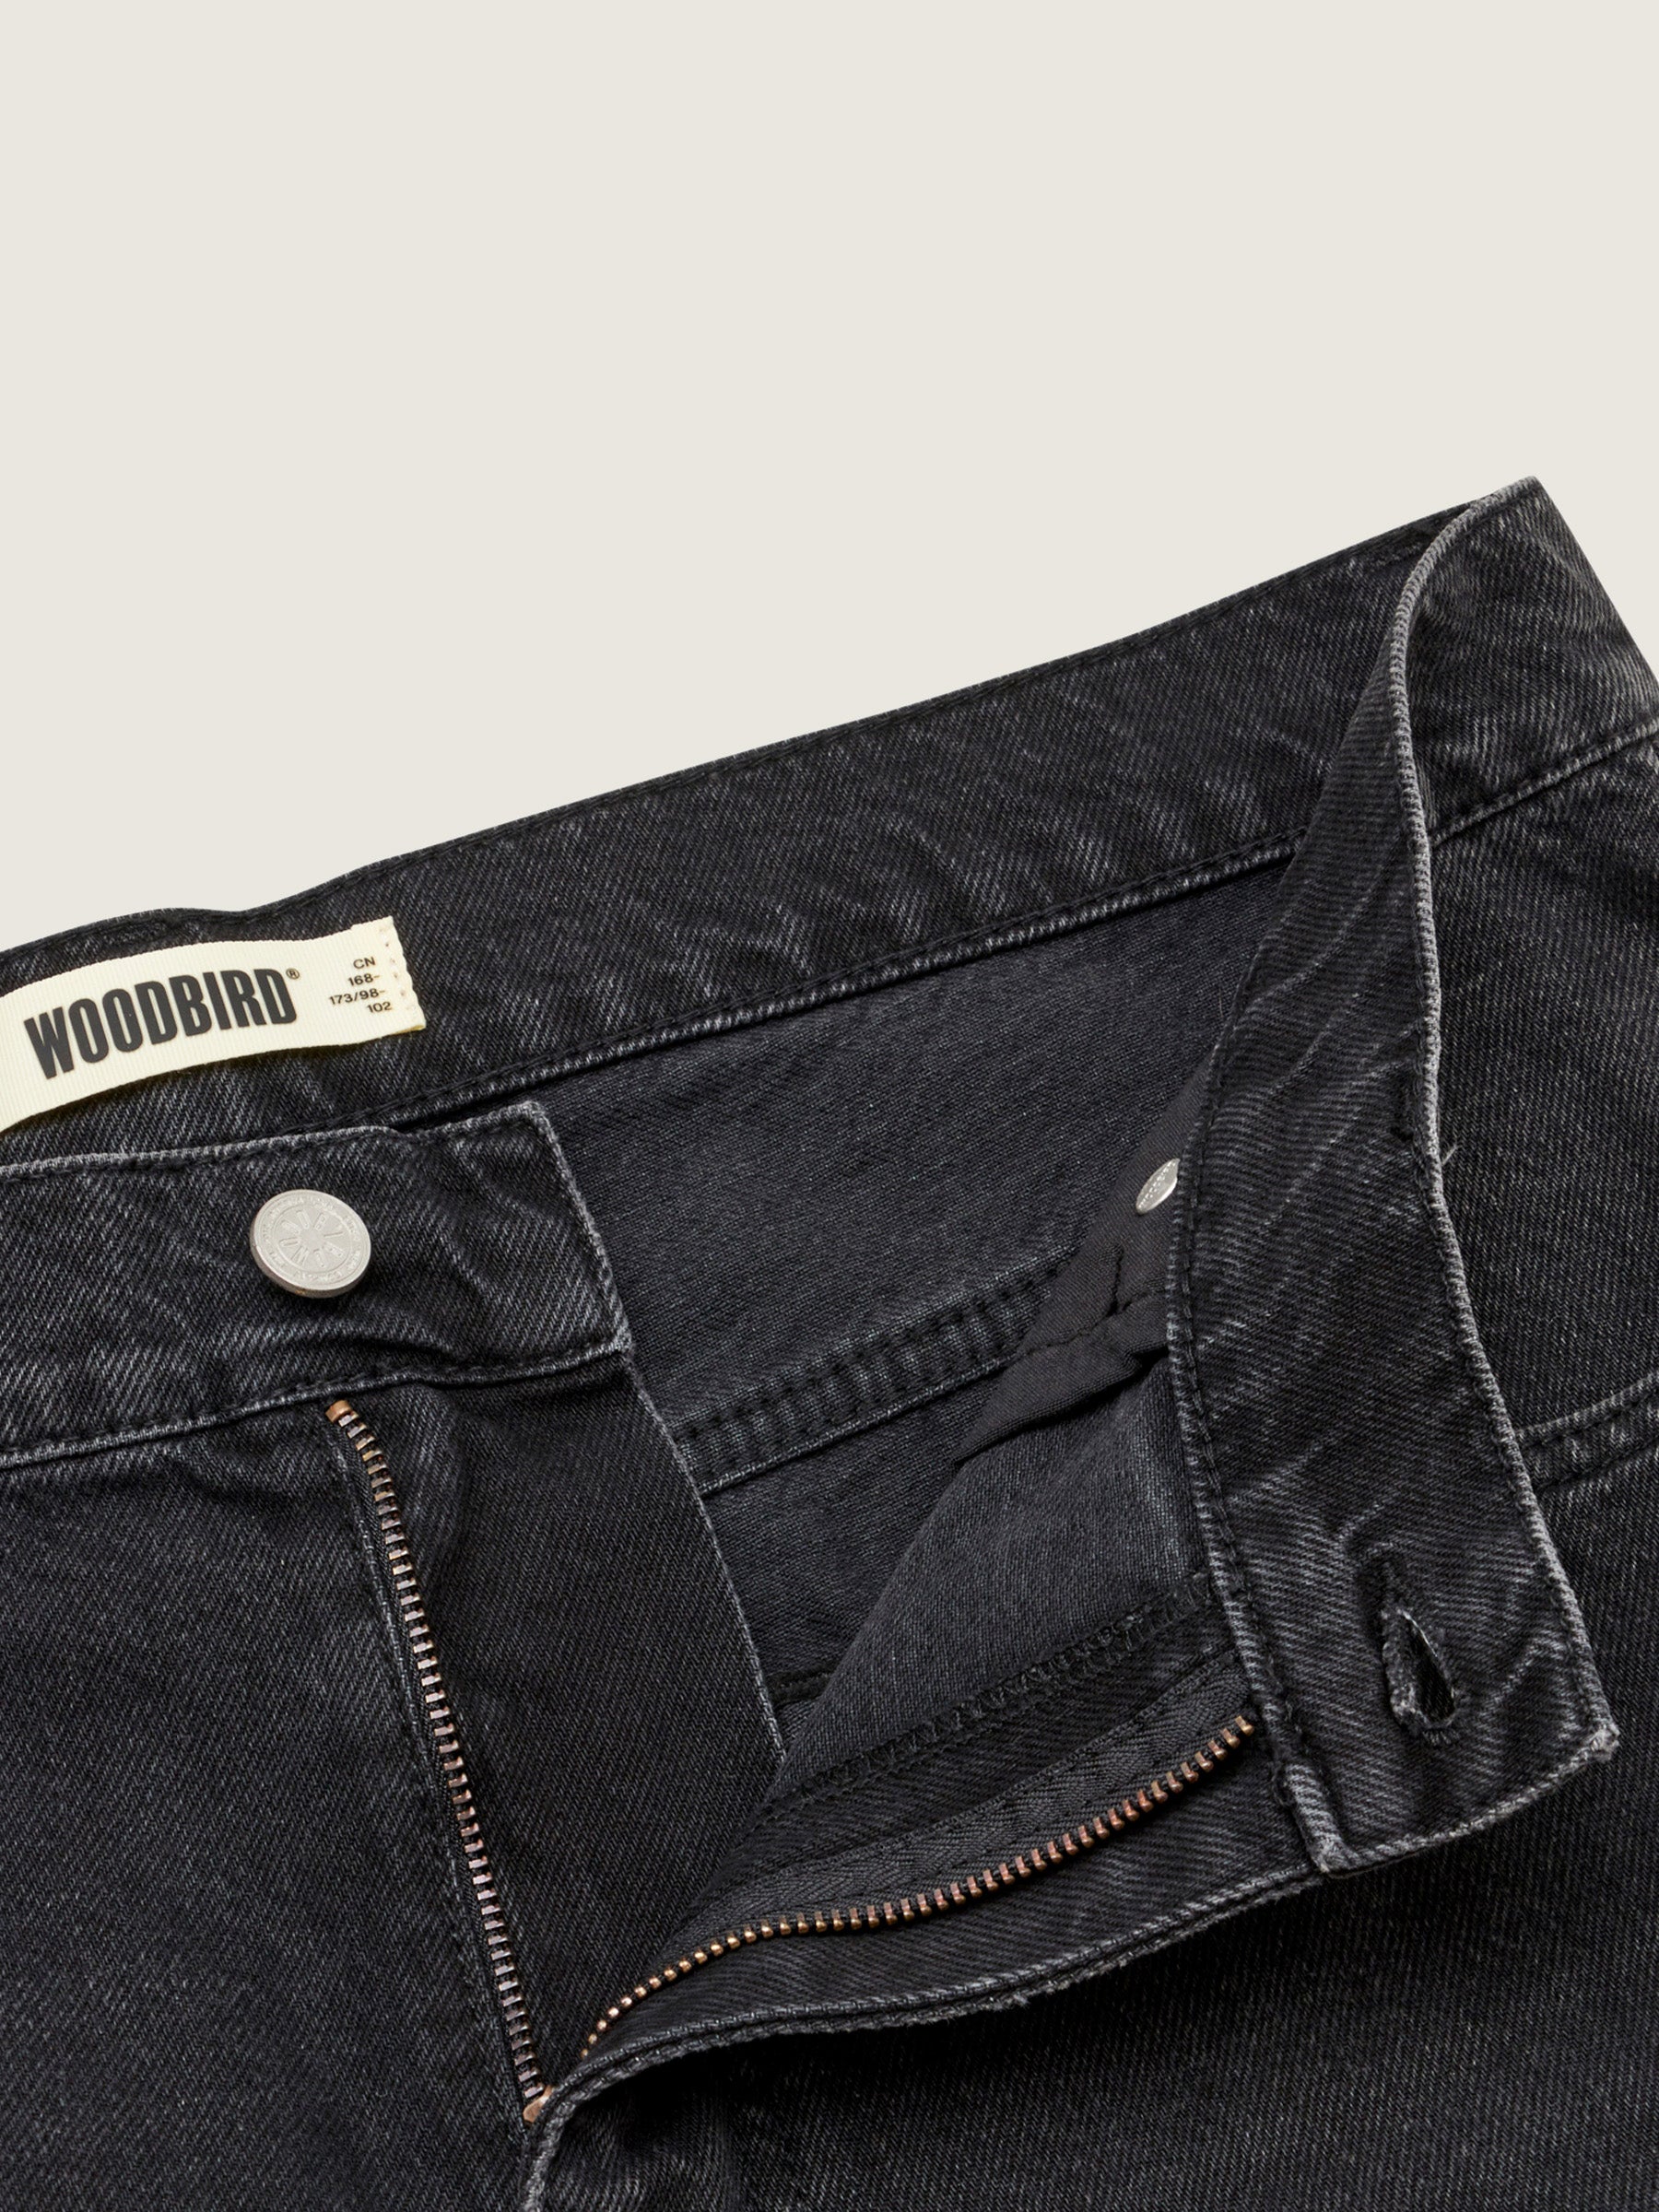 Woodbird WBRami Crow Jeans Jeans Black Vintage